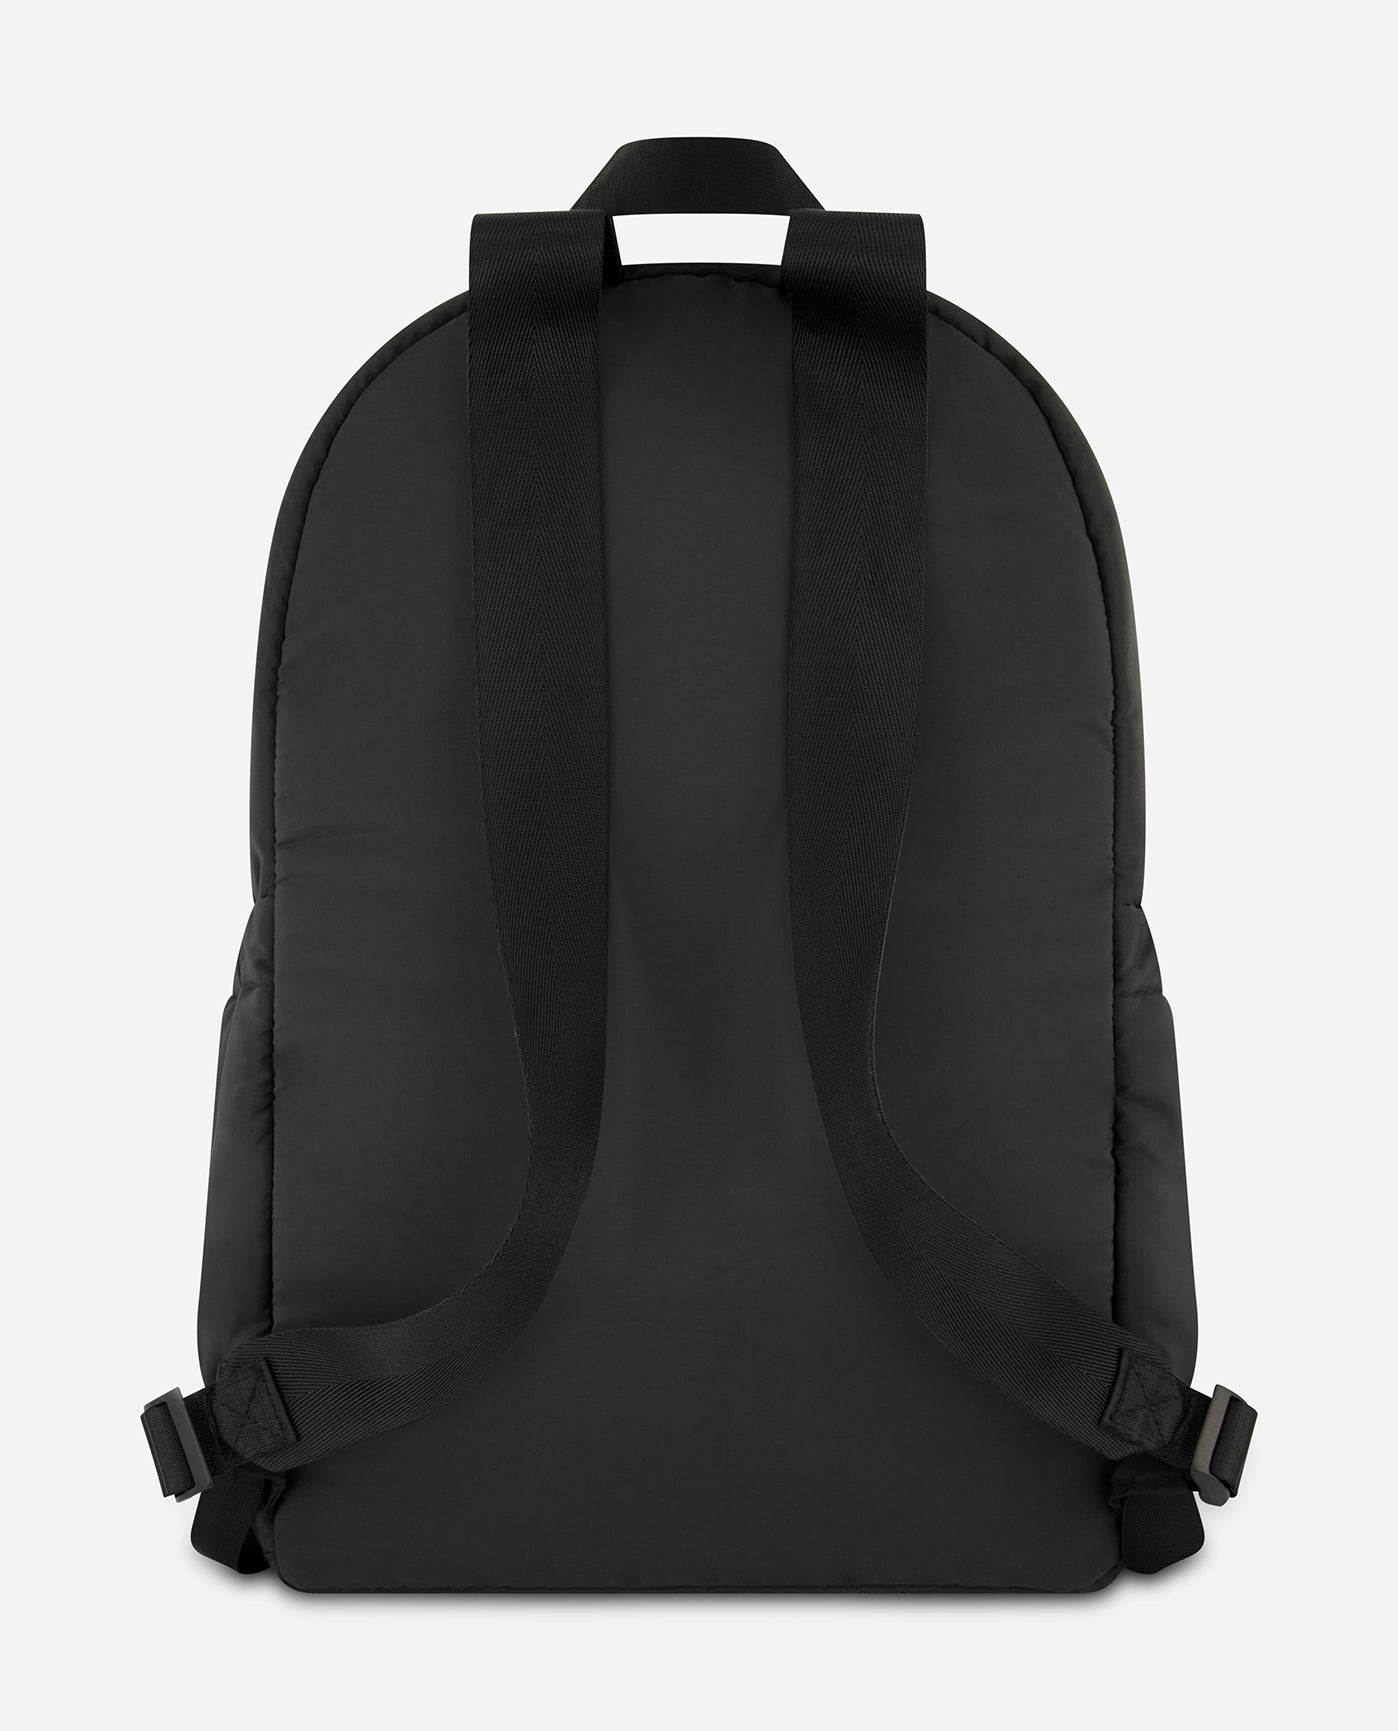 Danskin Yoga Bag Tote Convertible Backpack Vibrant Geometric Print Flawless